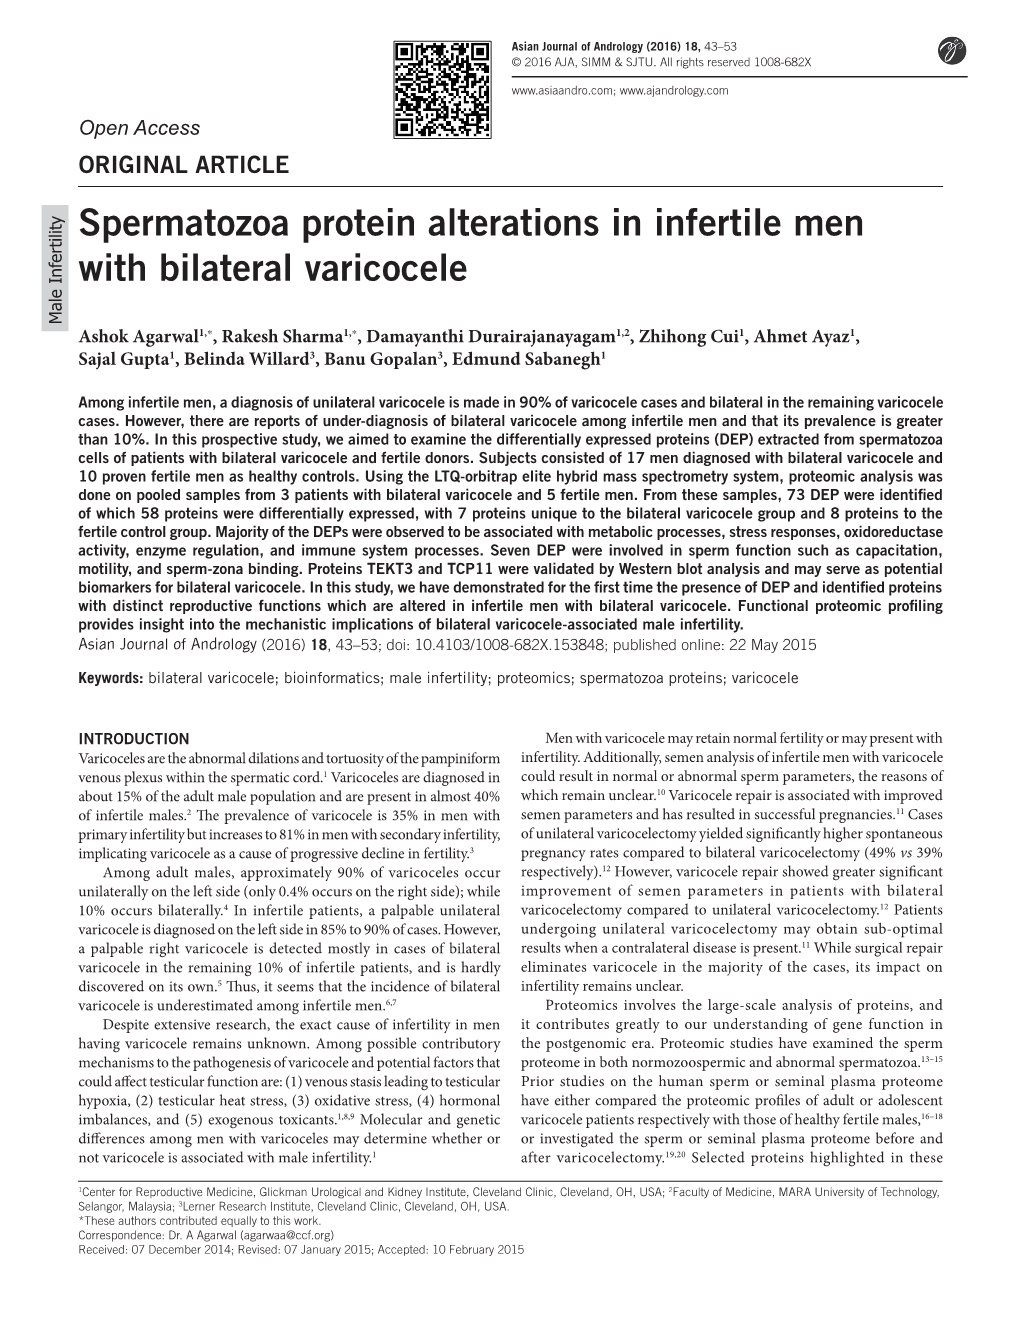 Spermatozoa Protein Alterations in Infertile Men with Bilateral Varicocele